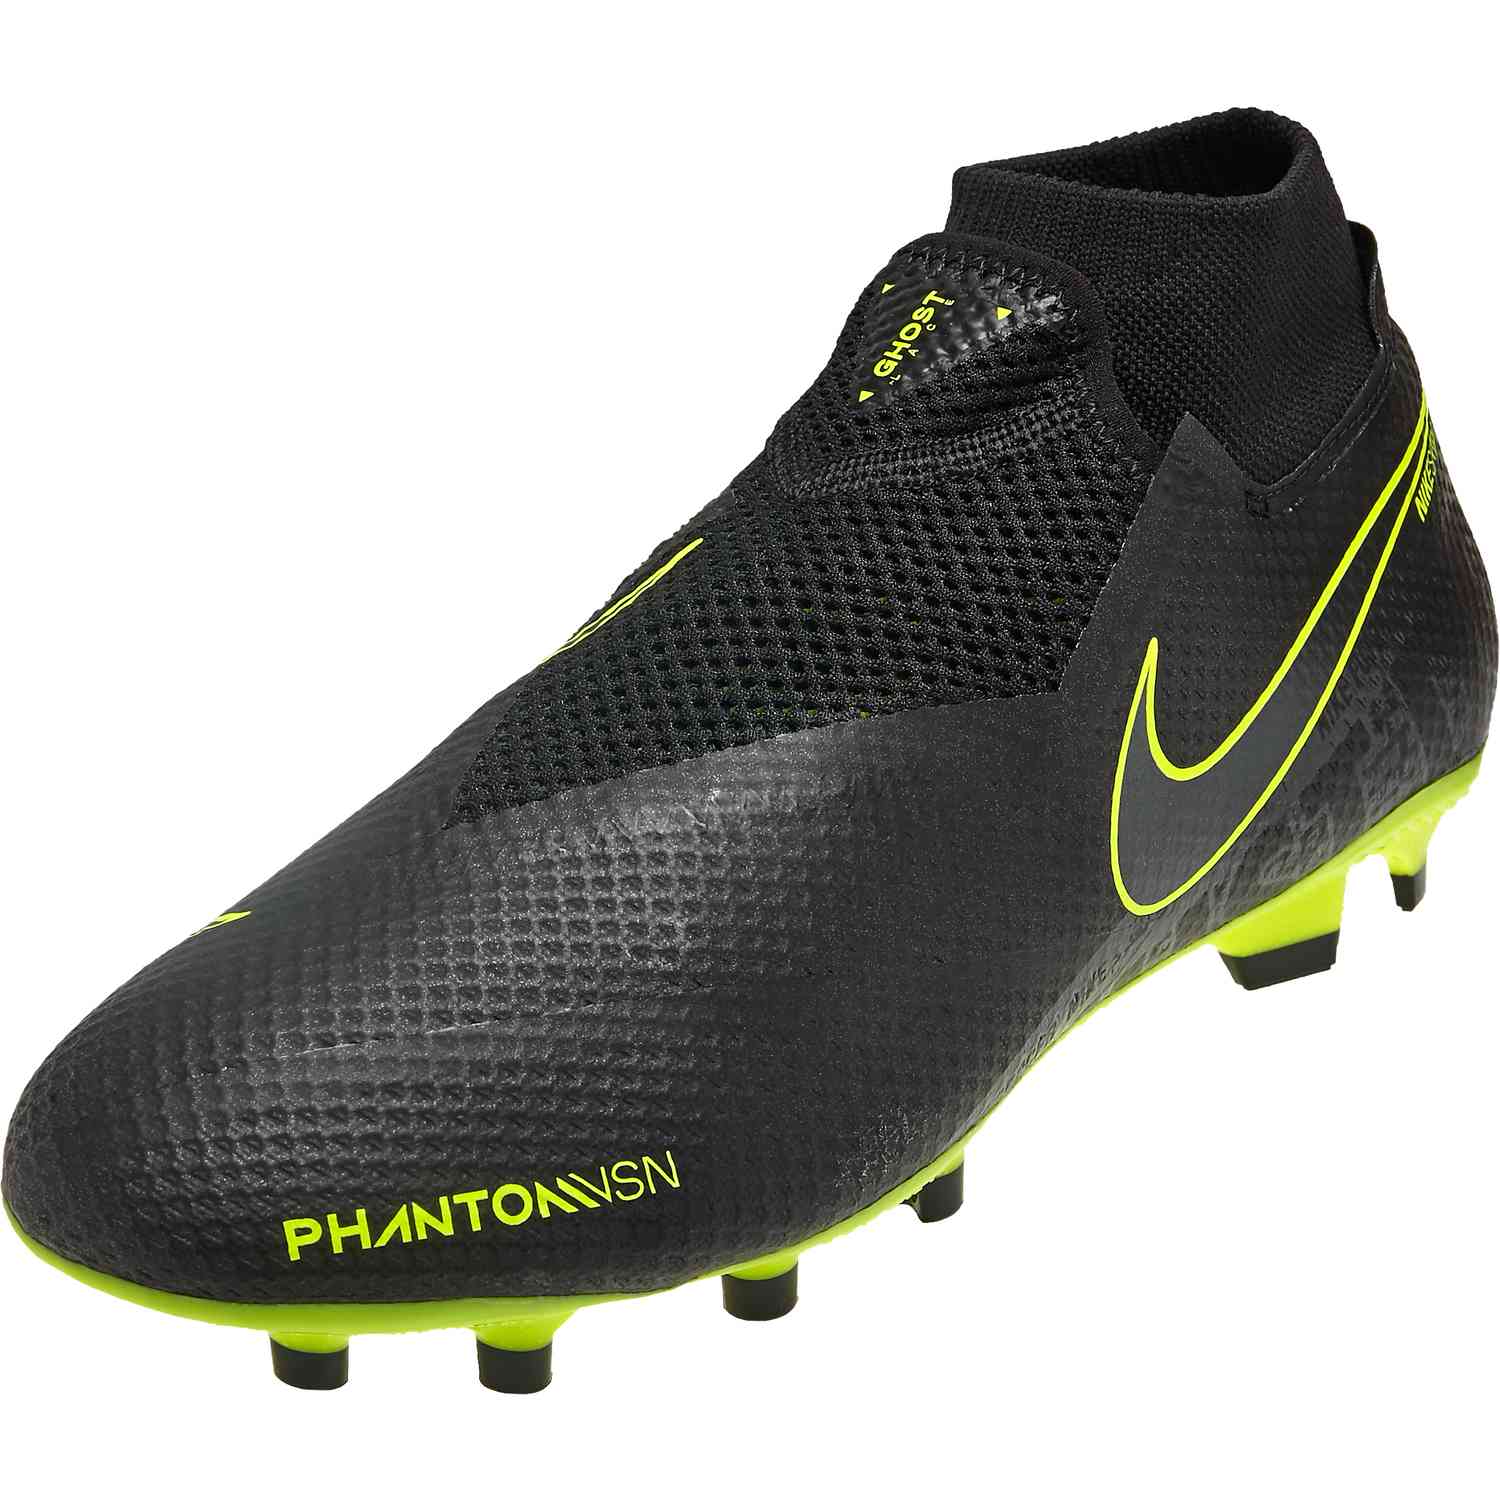 Nike Phantom Vision Pro FG - Under the 